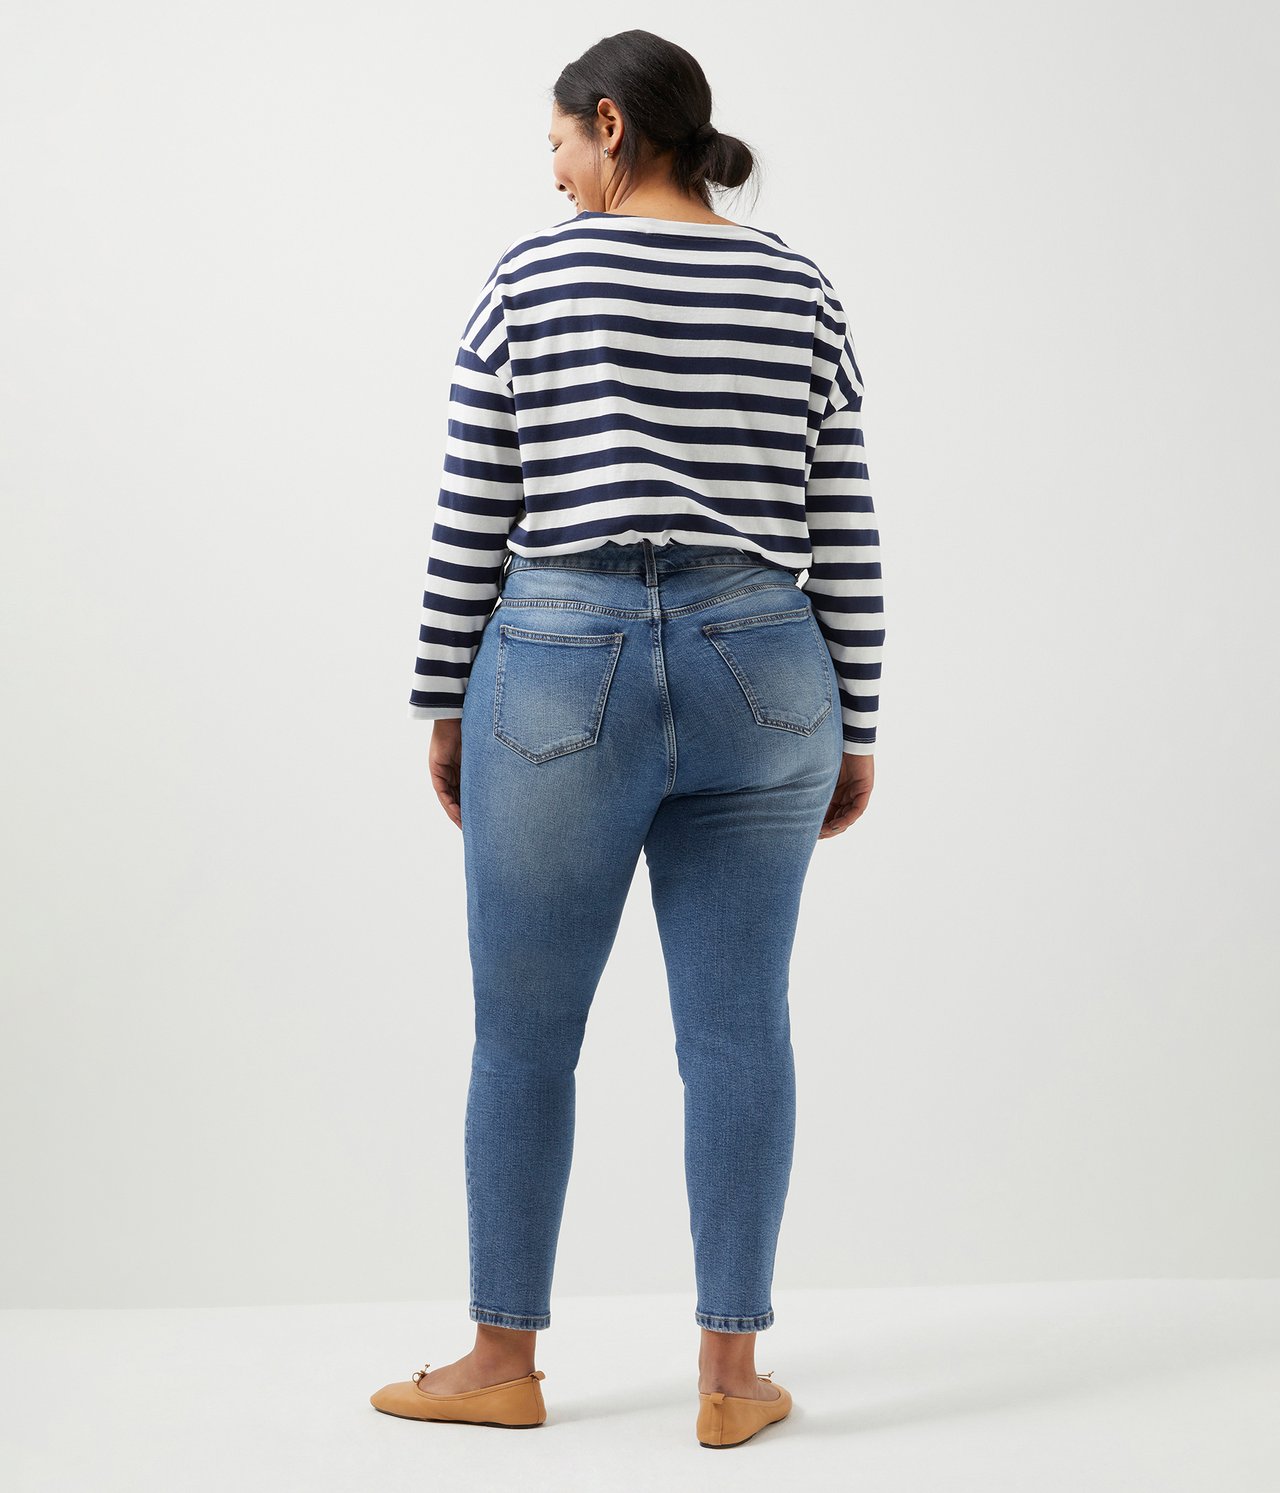 Ebba slim jeans short leg Denimi - 48S - 0